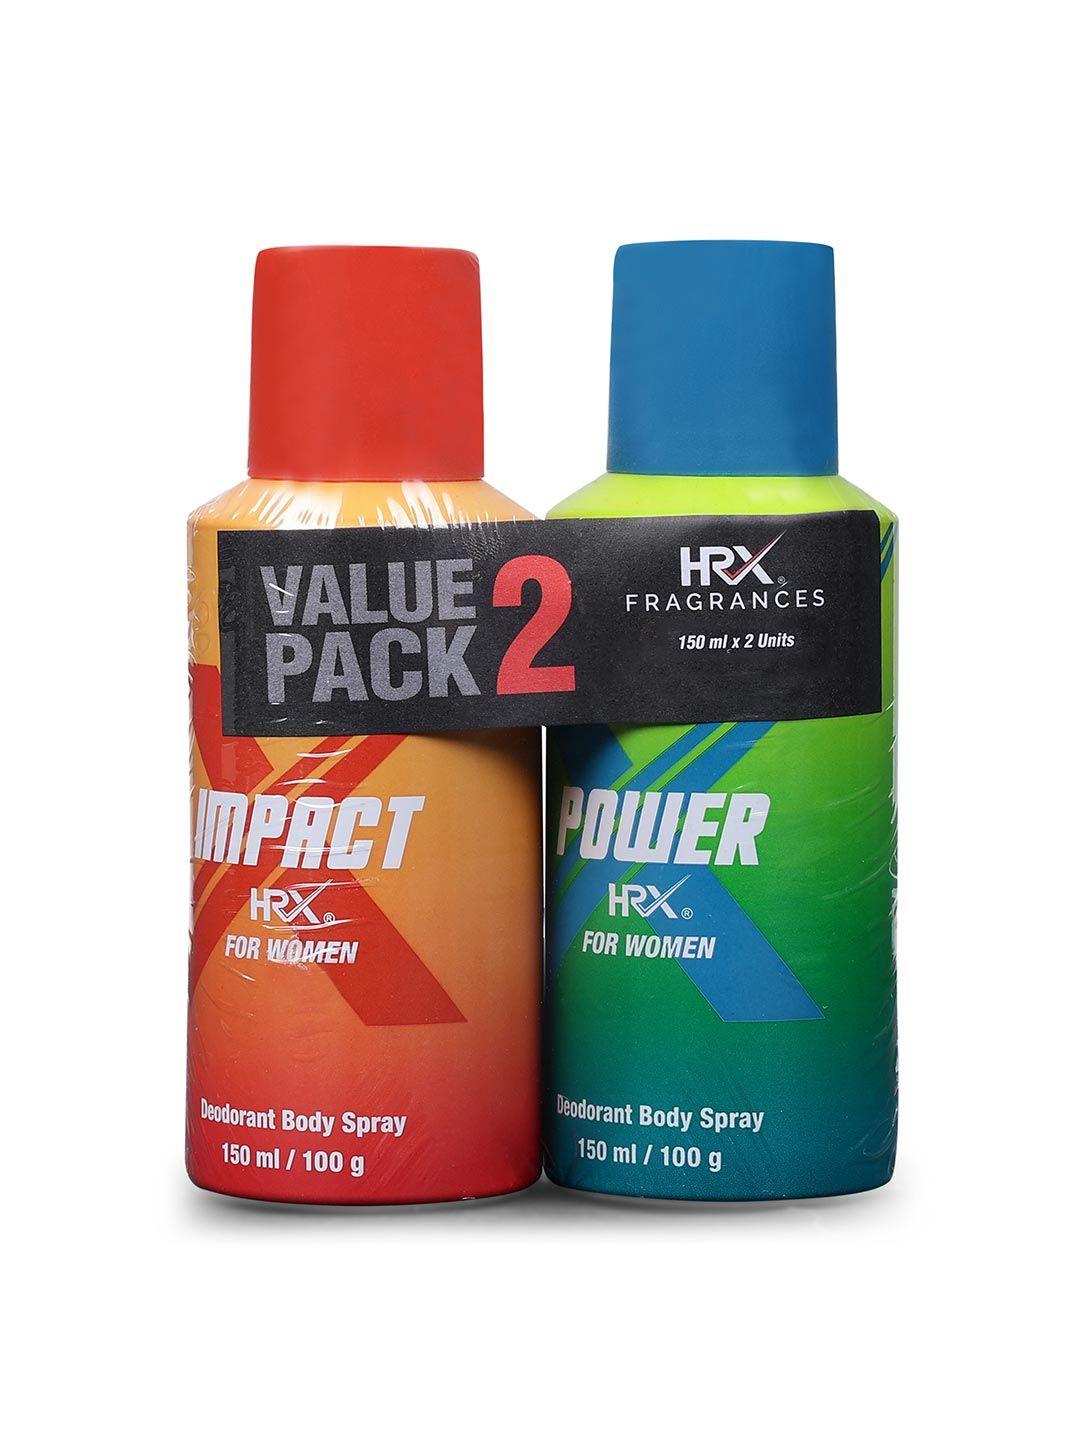 hrx women set of impact & power deodorant body spray - 100 g each